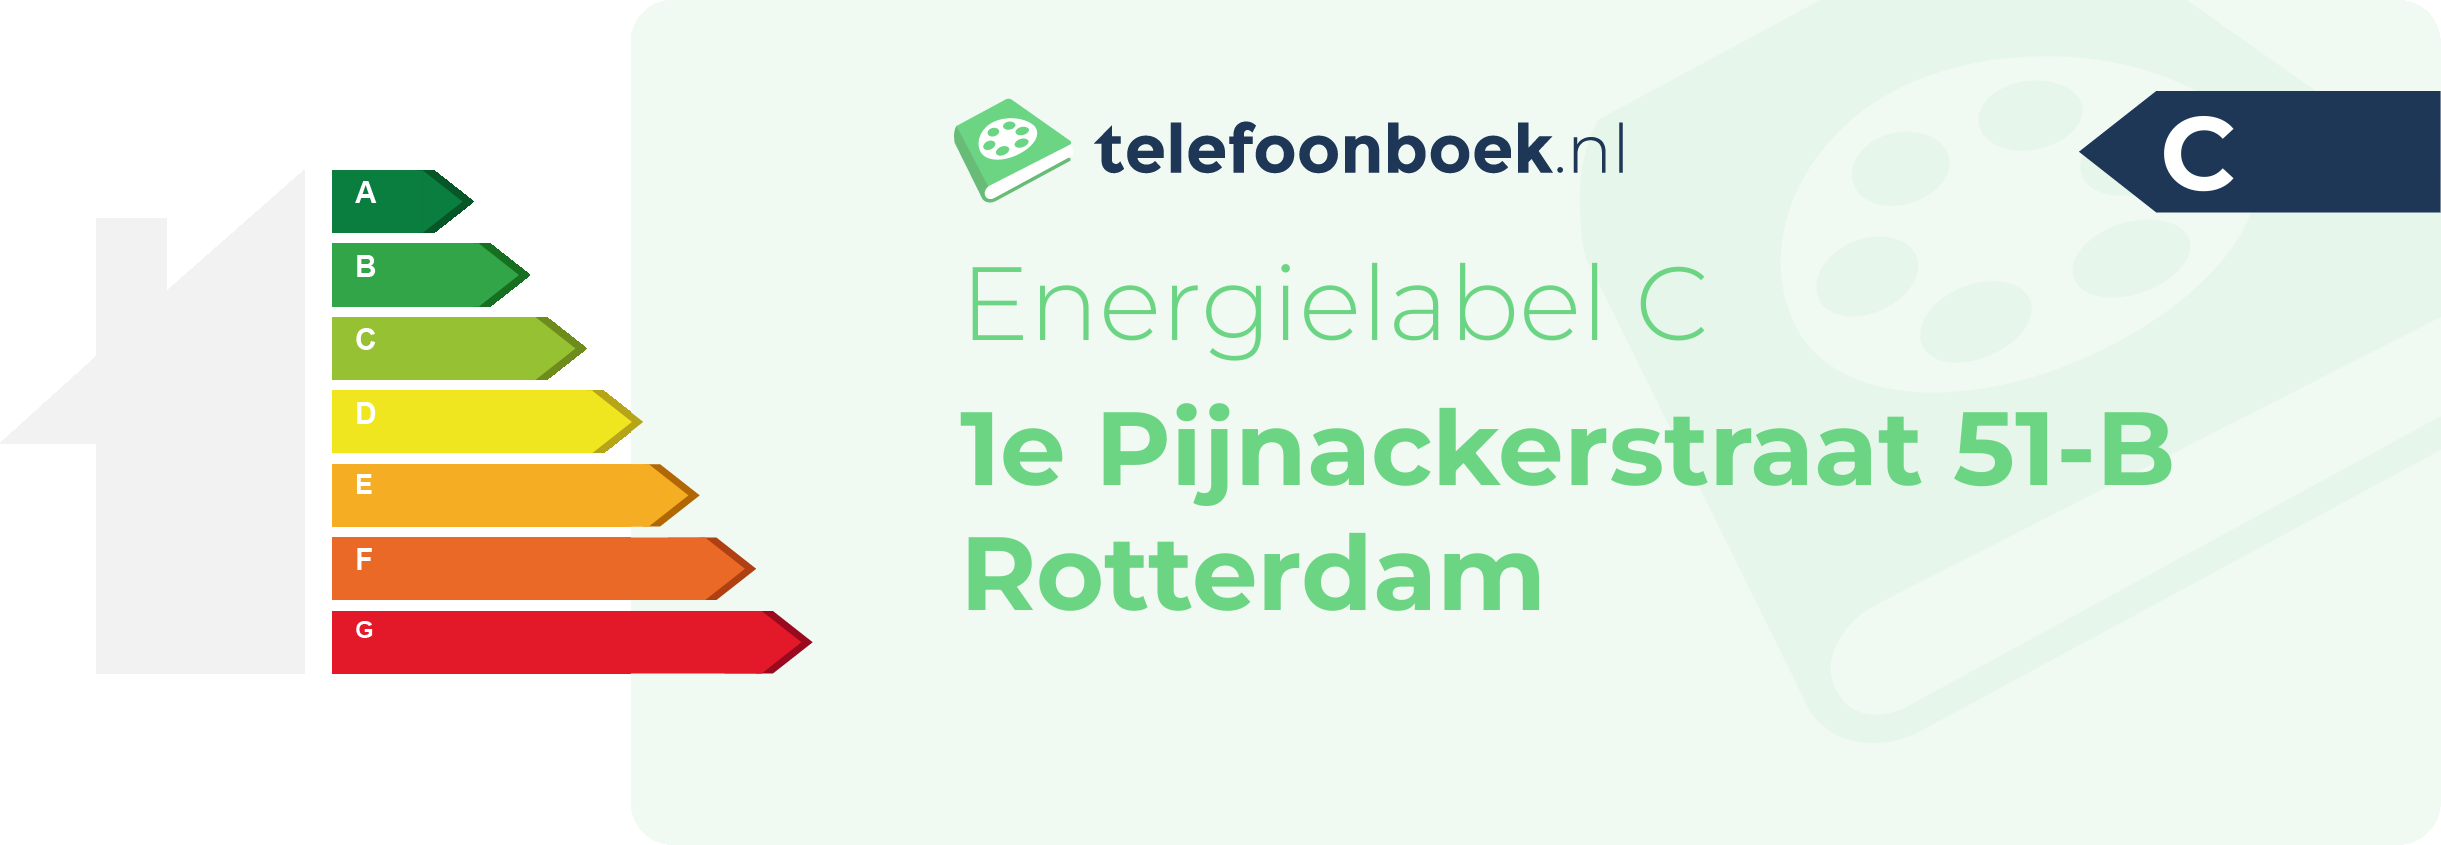 Energielabel 1e Pijnackerstraat 51-B Rotterdam